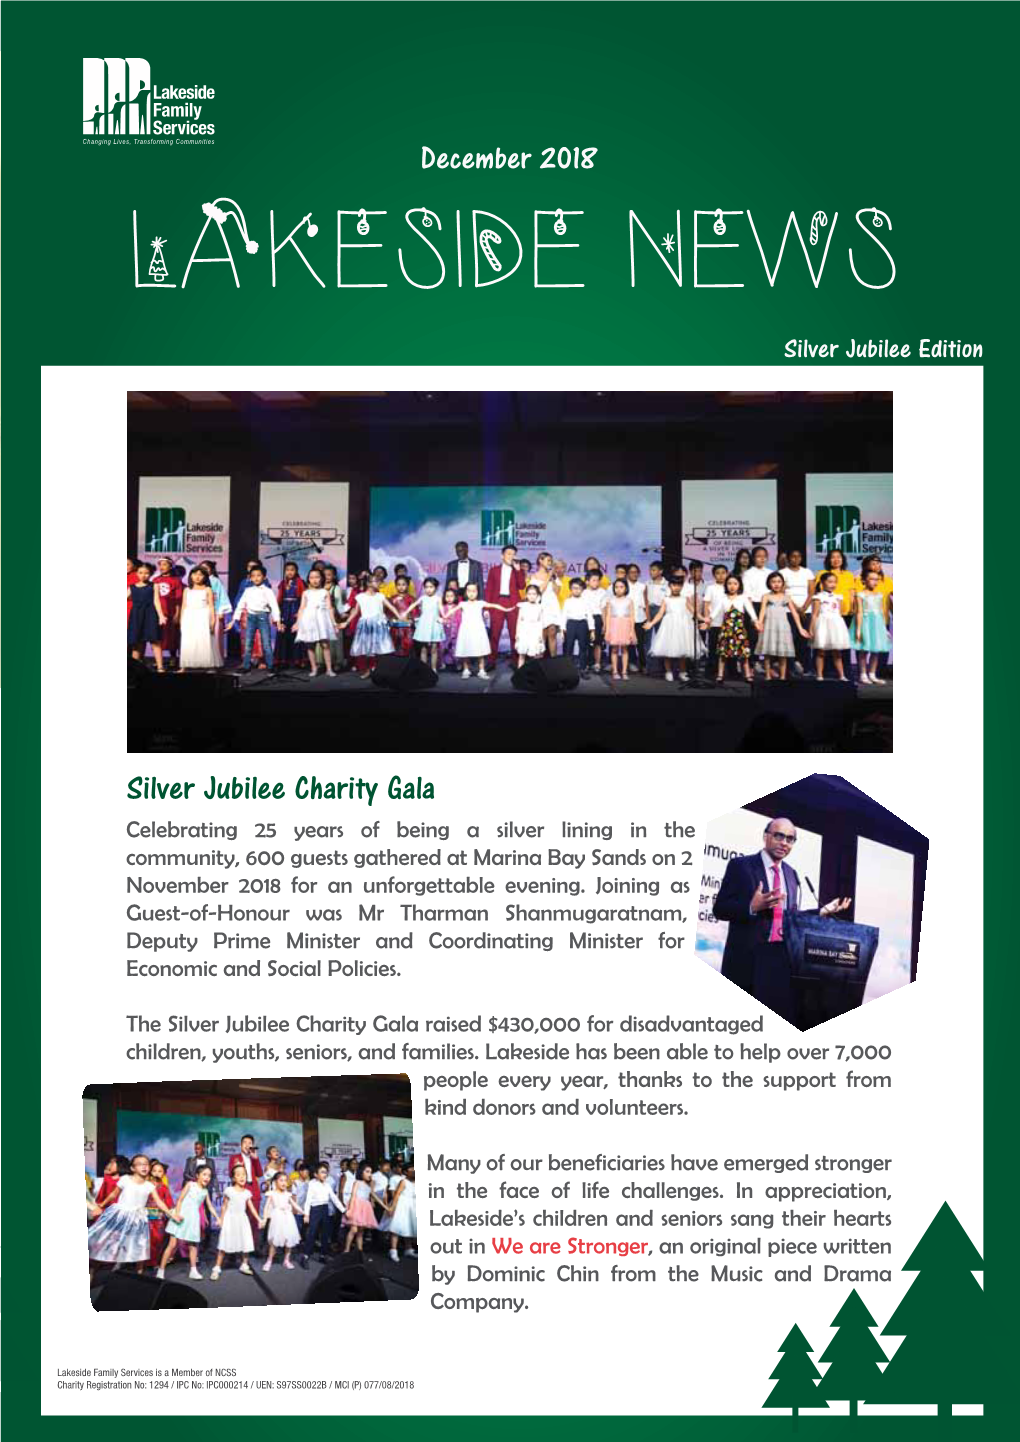 LAKESIDE NEWS Silver Jubilee Edition